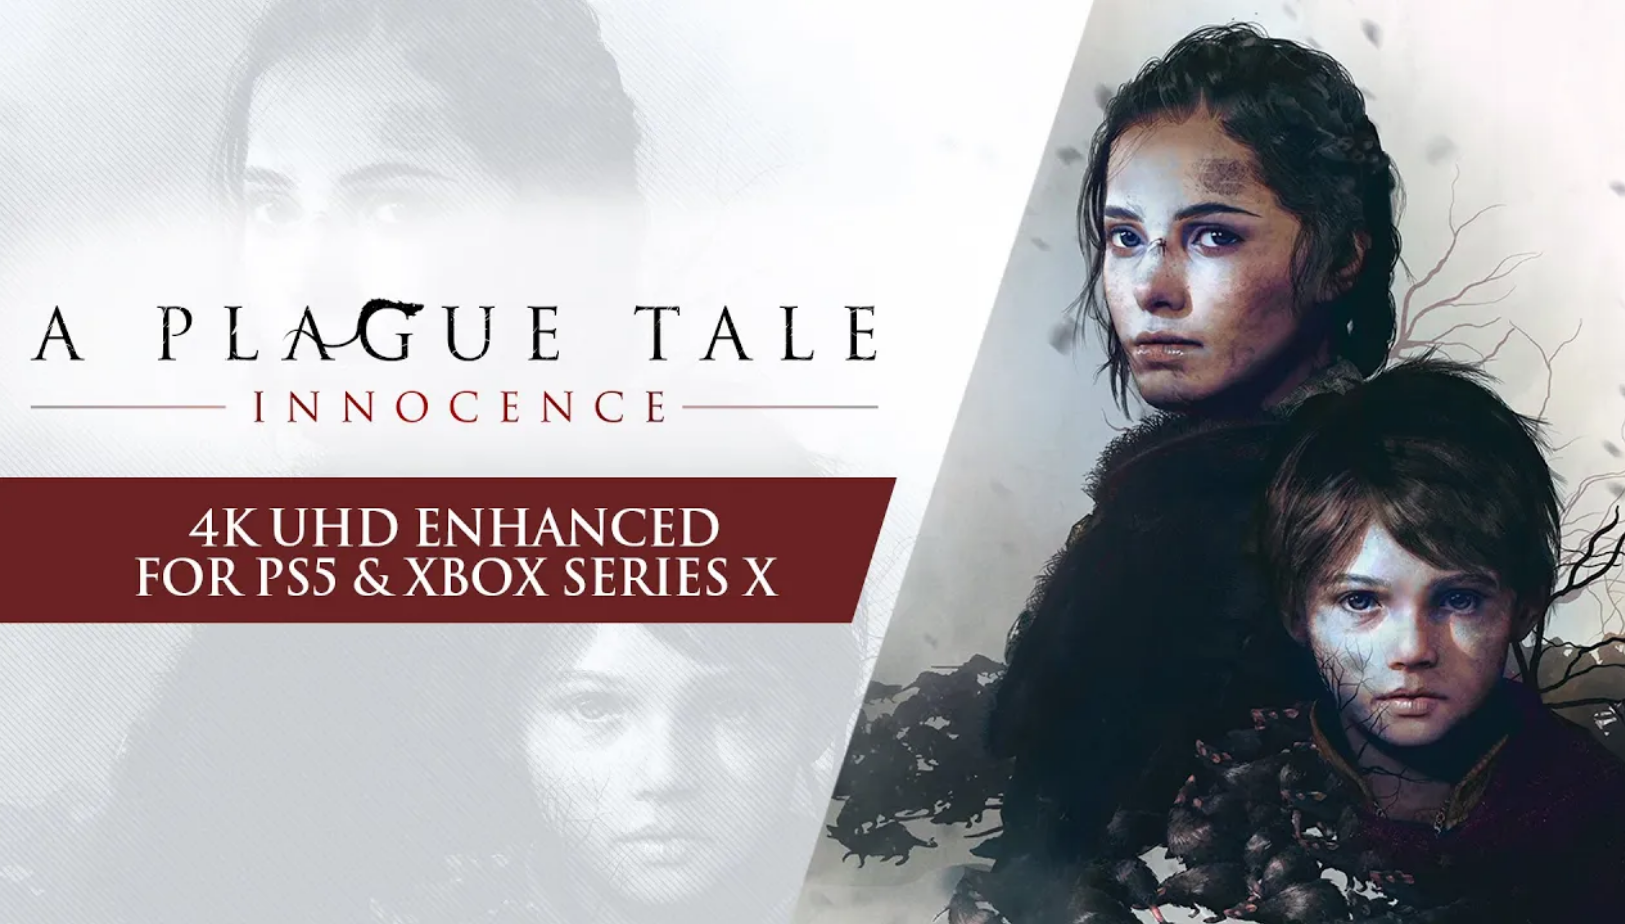 A Plague Tale: Requiem Performance Review PS5 vs Xbox Series X